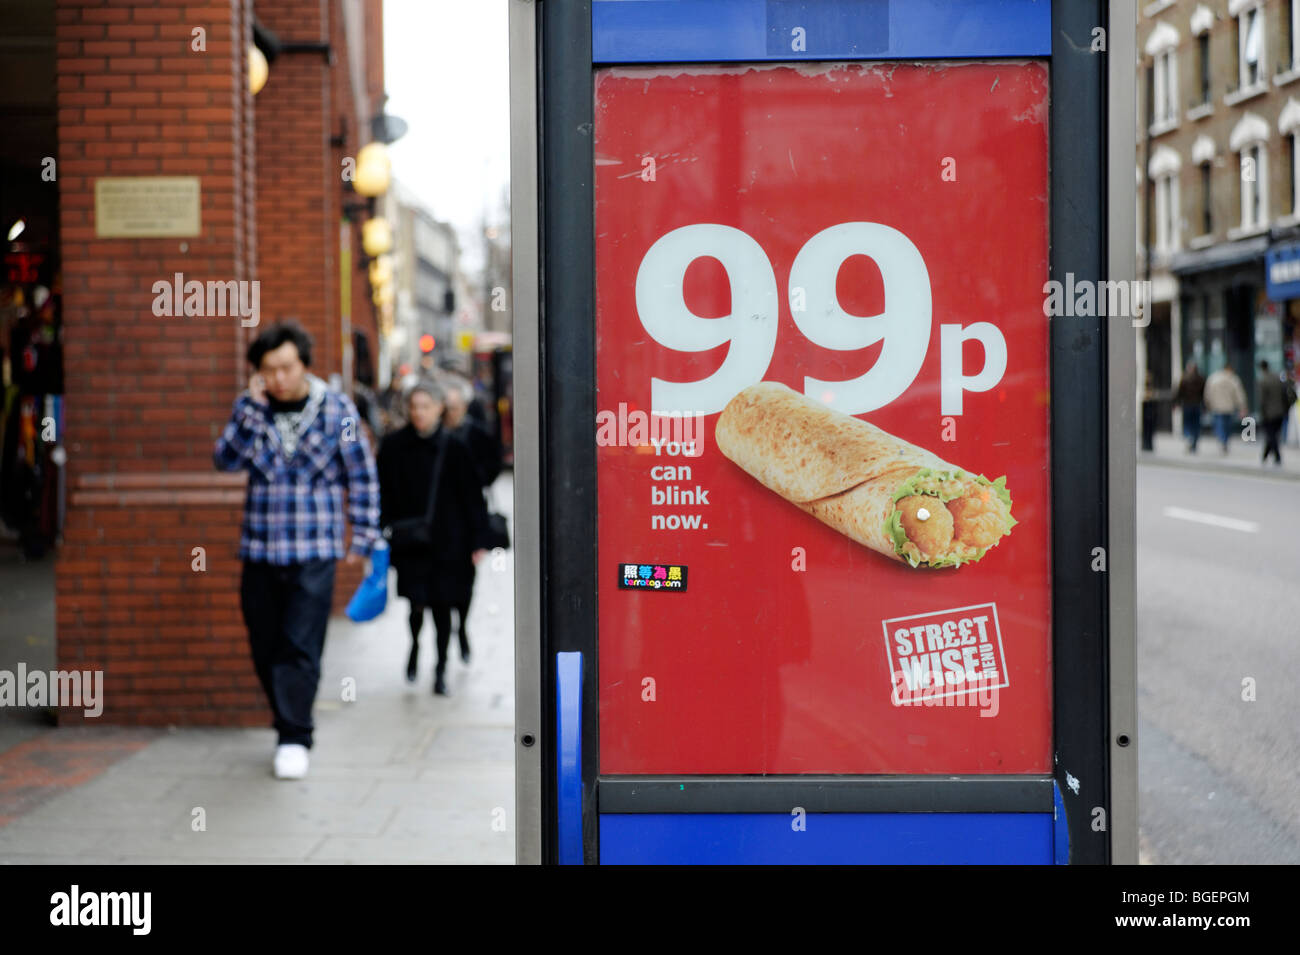 Publicidad para 99p comida barata tratar por High street take-away. Londres. UK 2009 Foto de stock